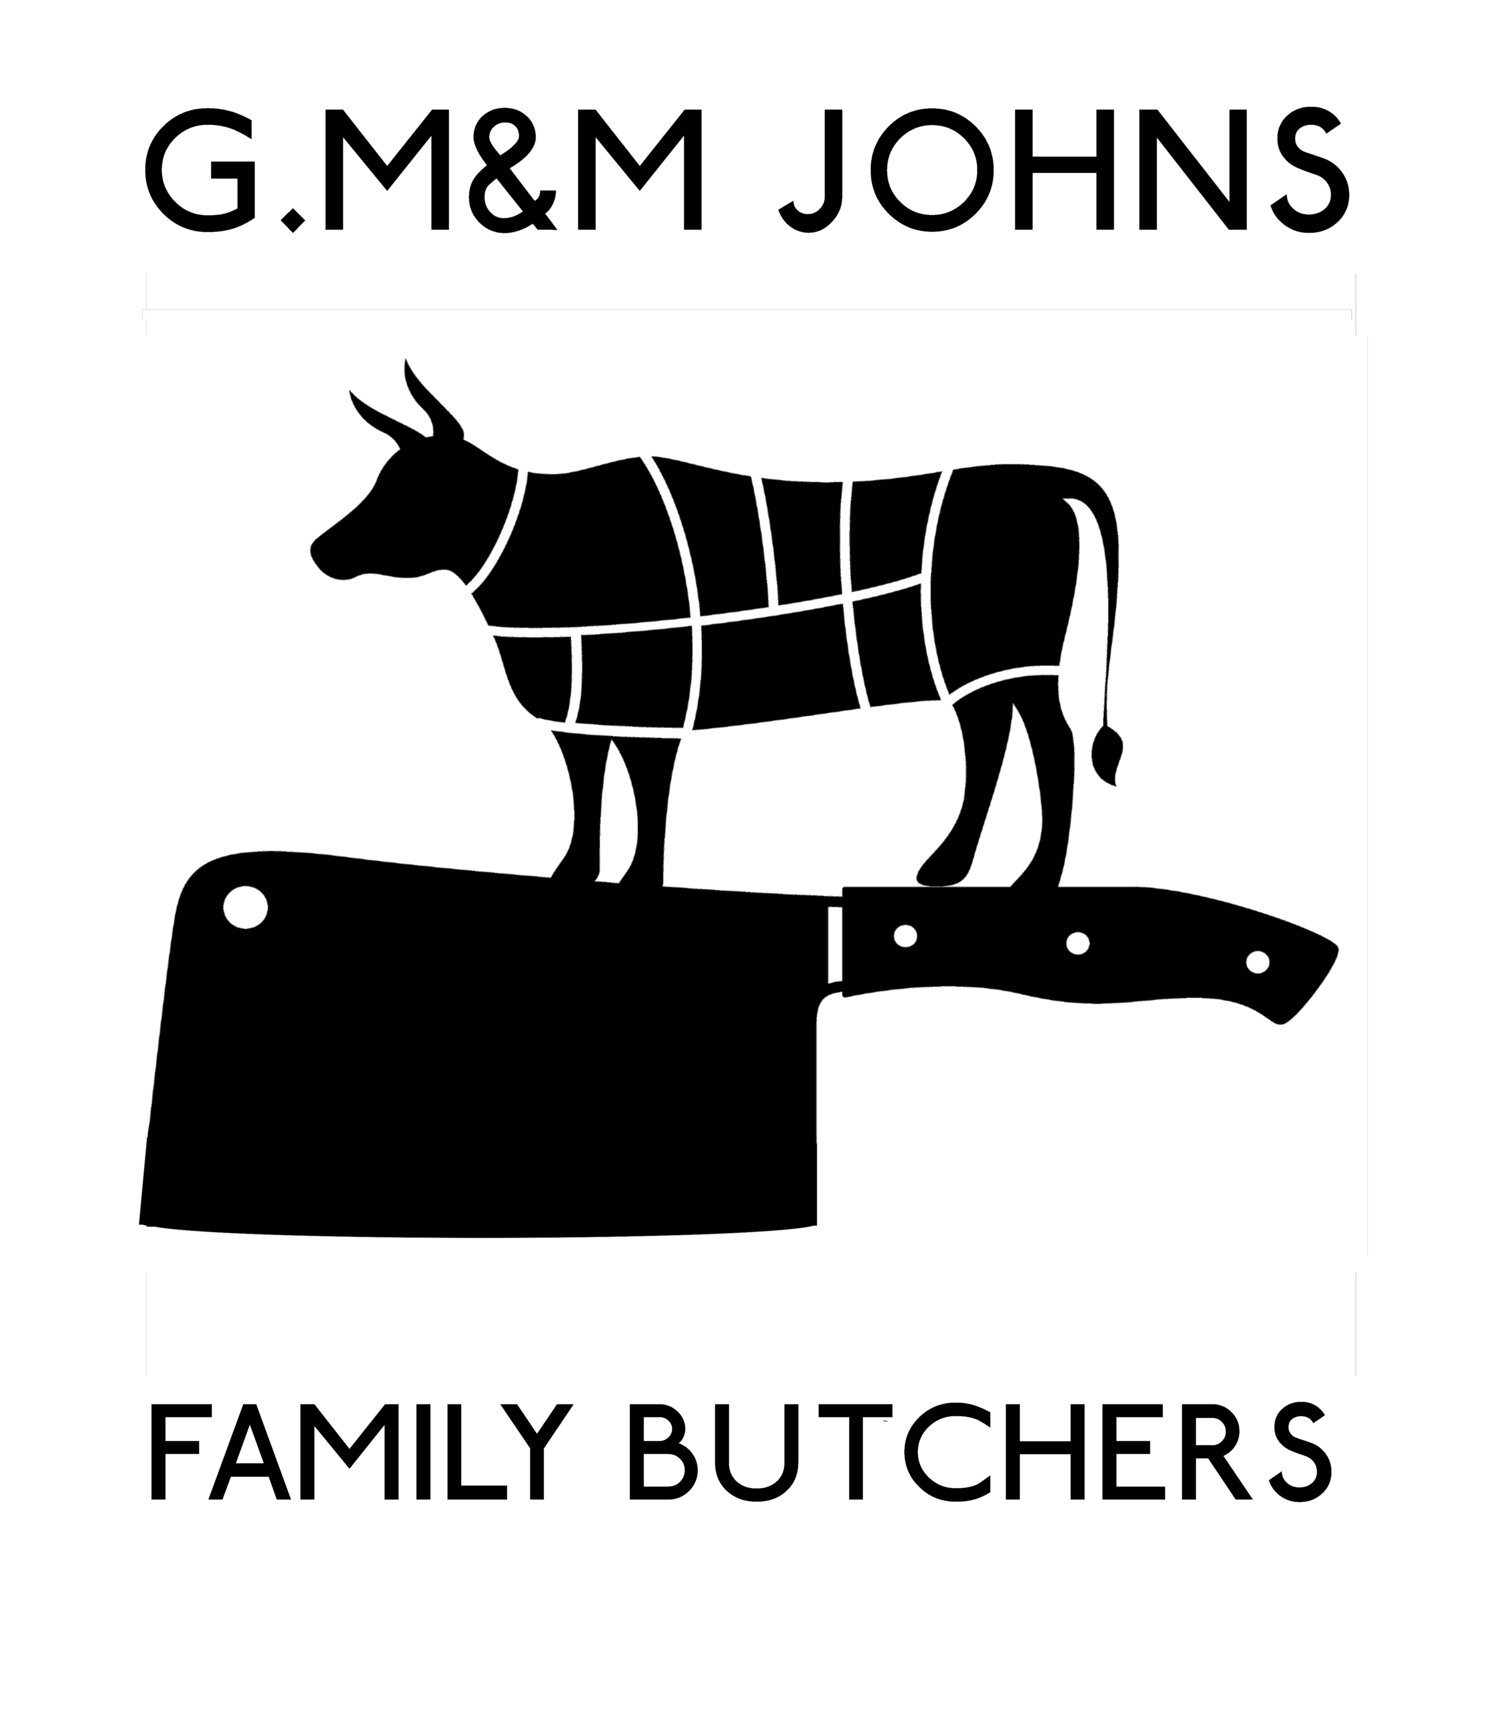 G.M&M JOHNS FAMILY BUTCHERS